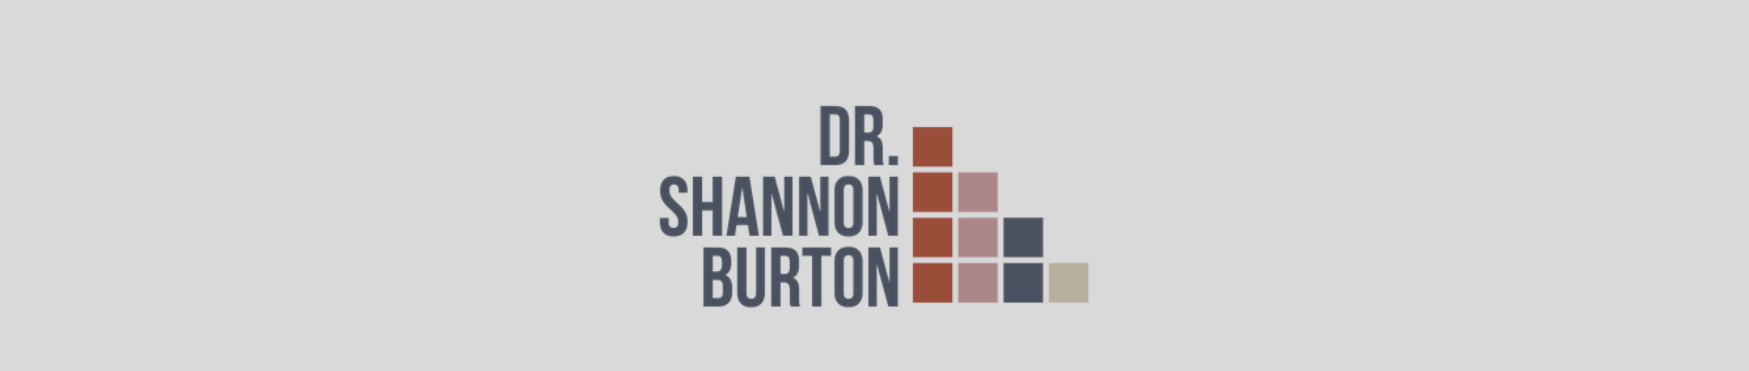 Dr. Shannon Burton's profile banner